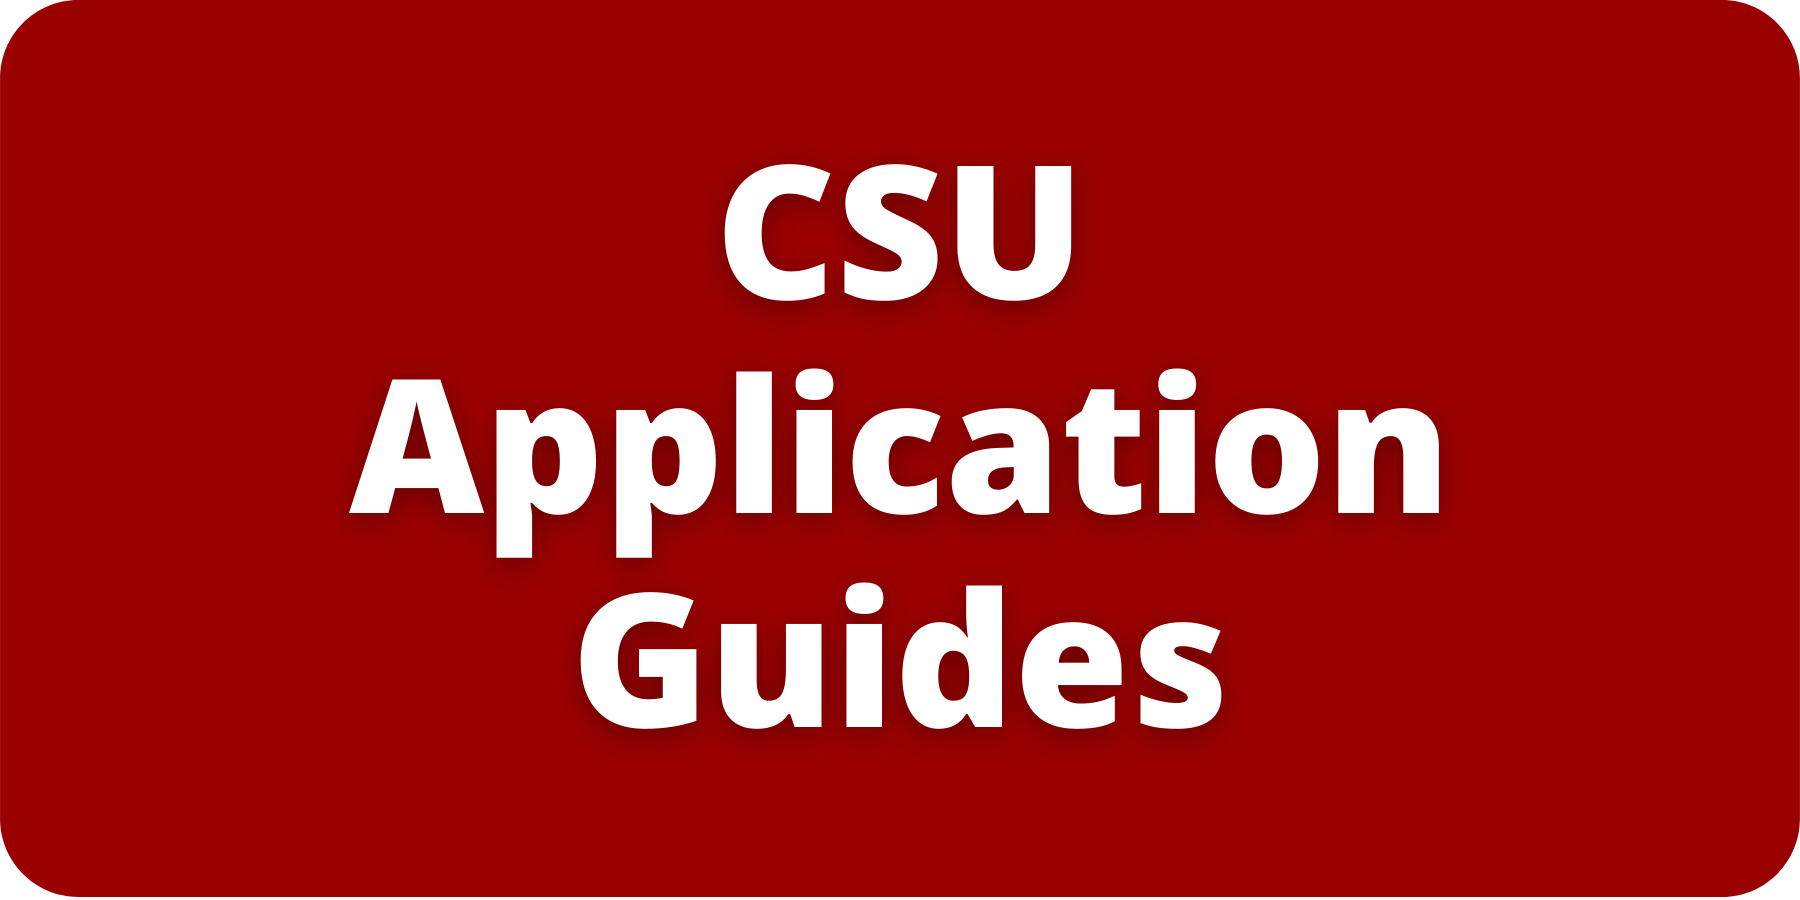 CSU Application Guides